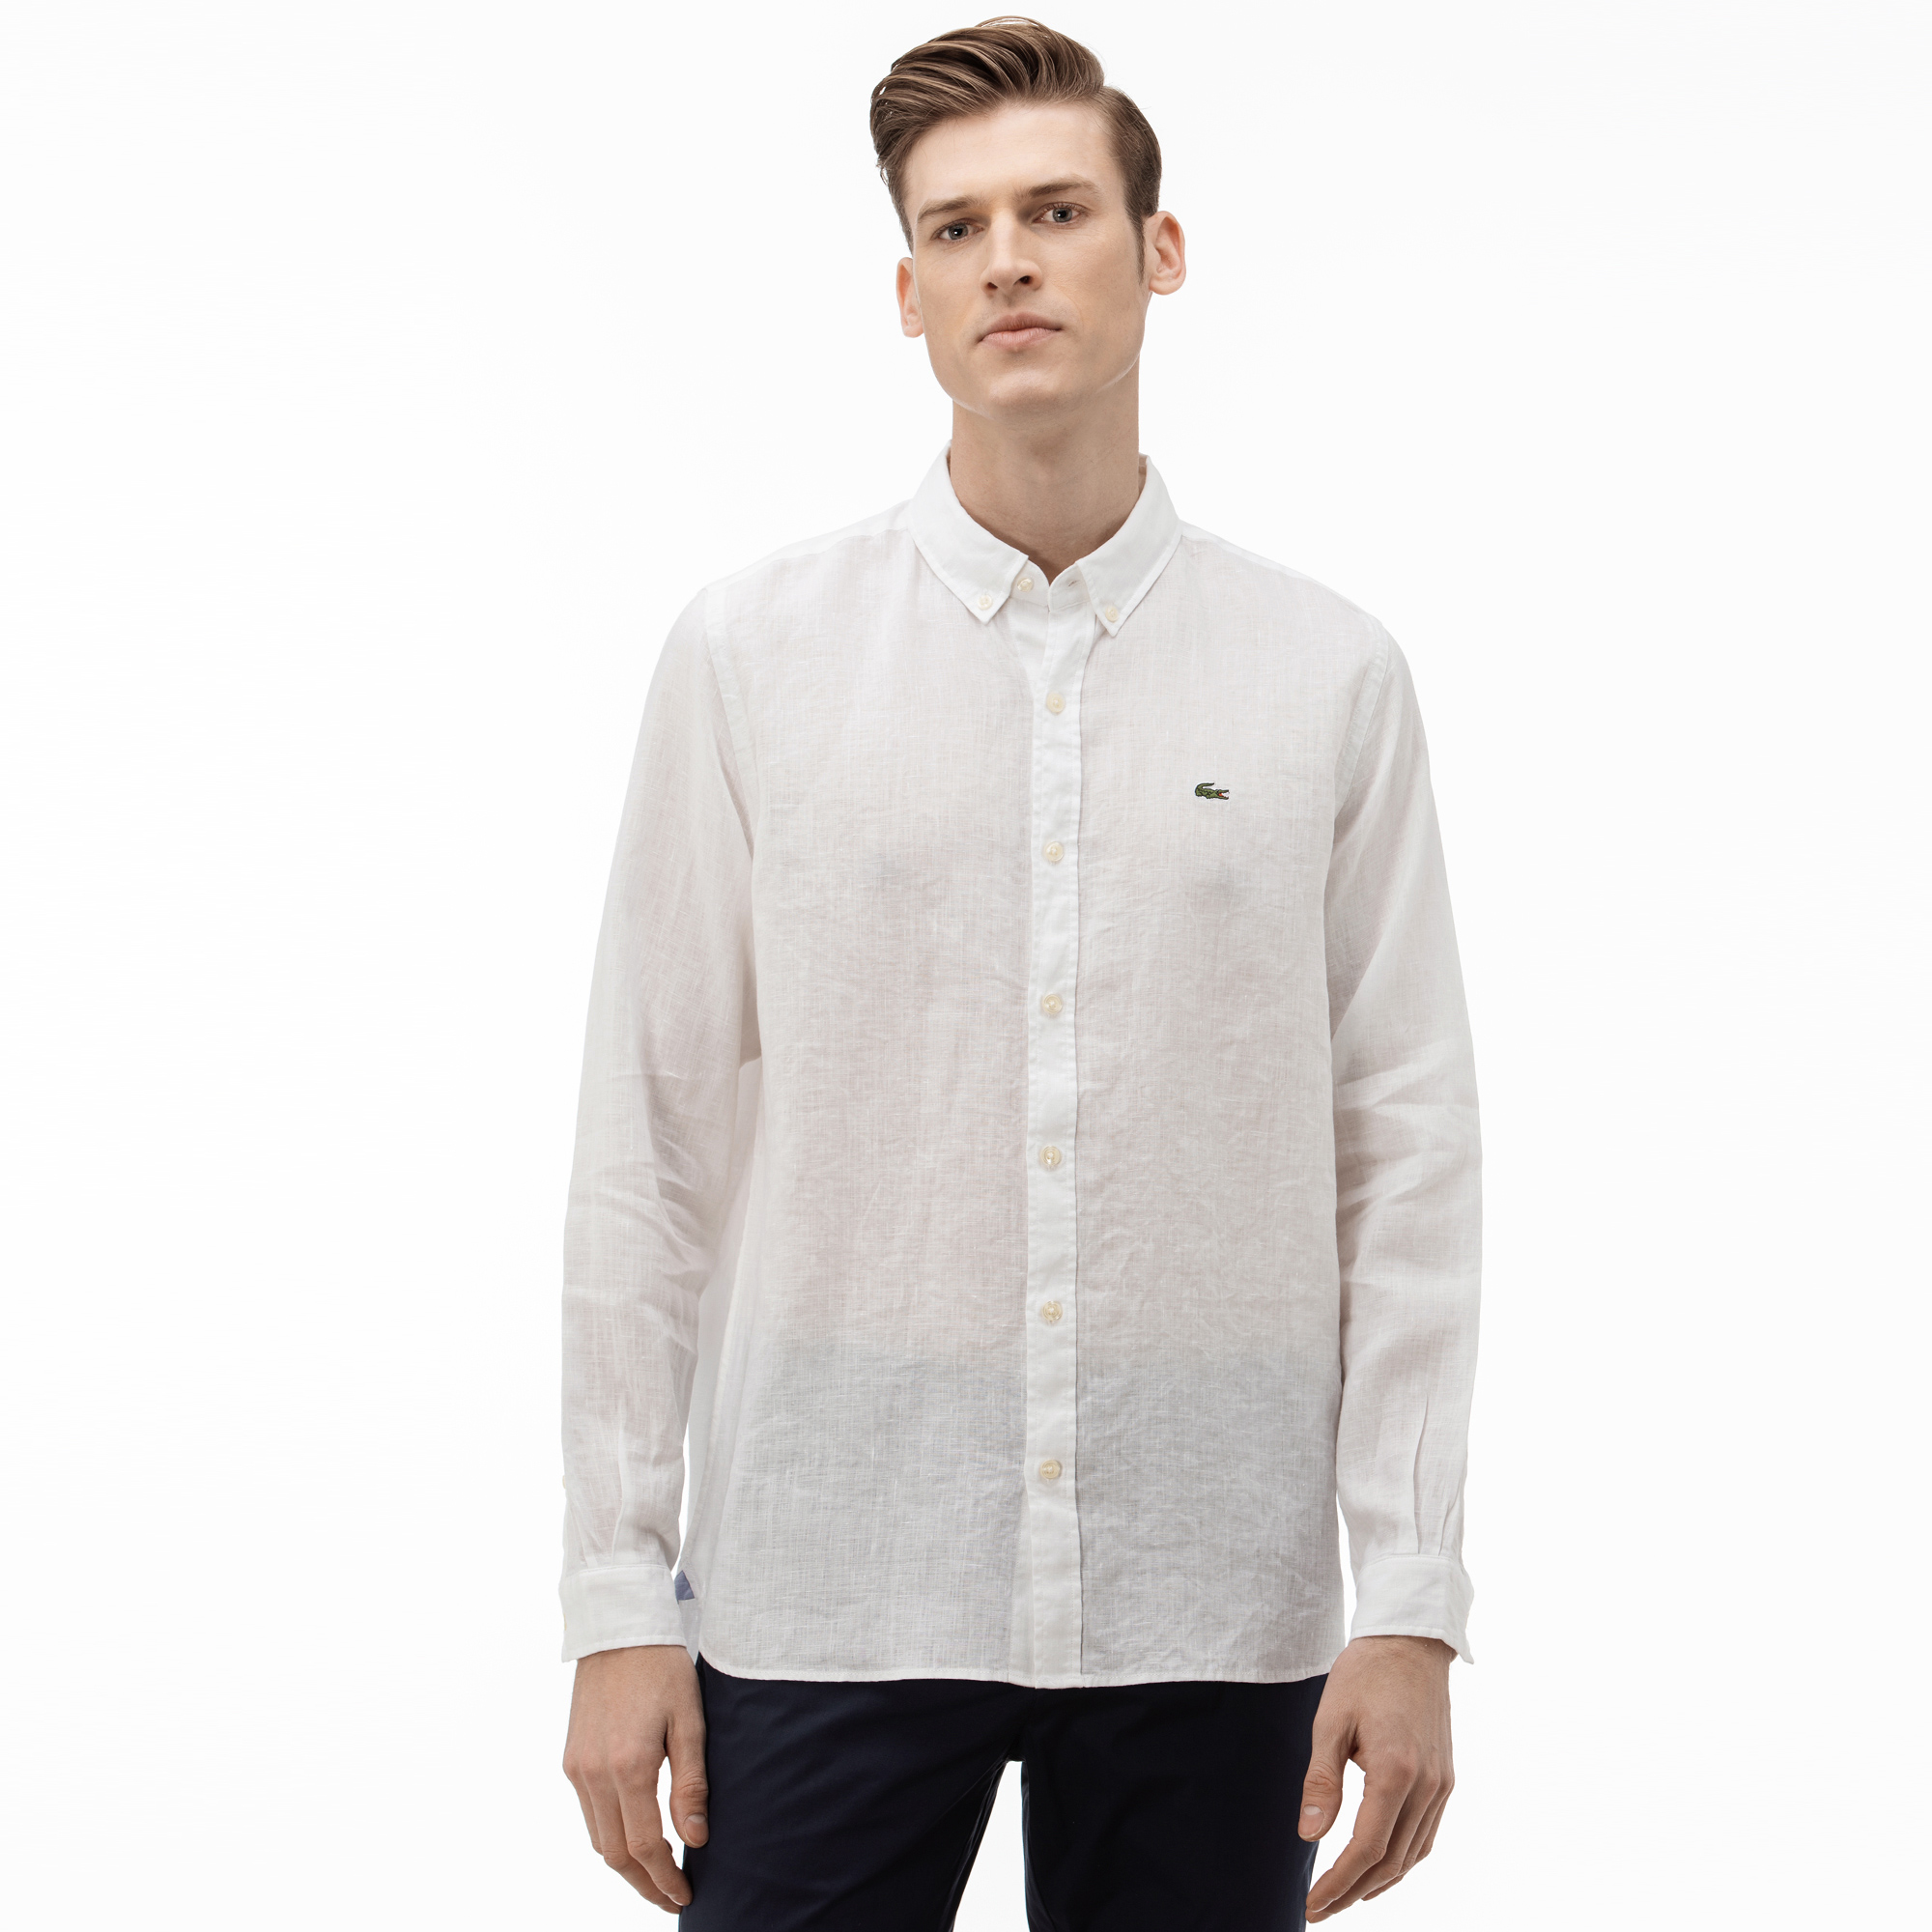 lacoste white linen shirt